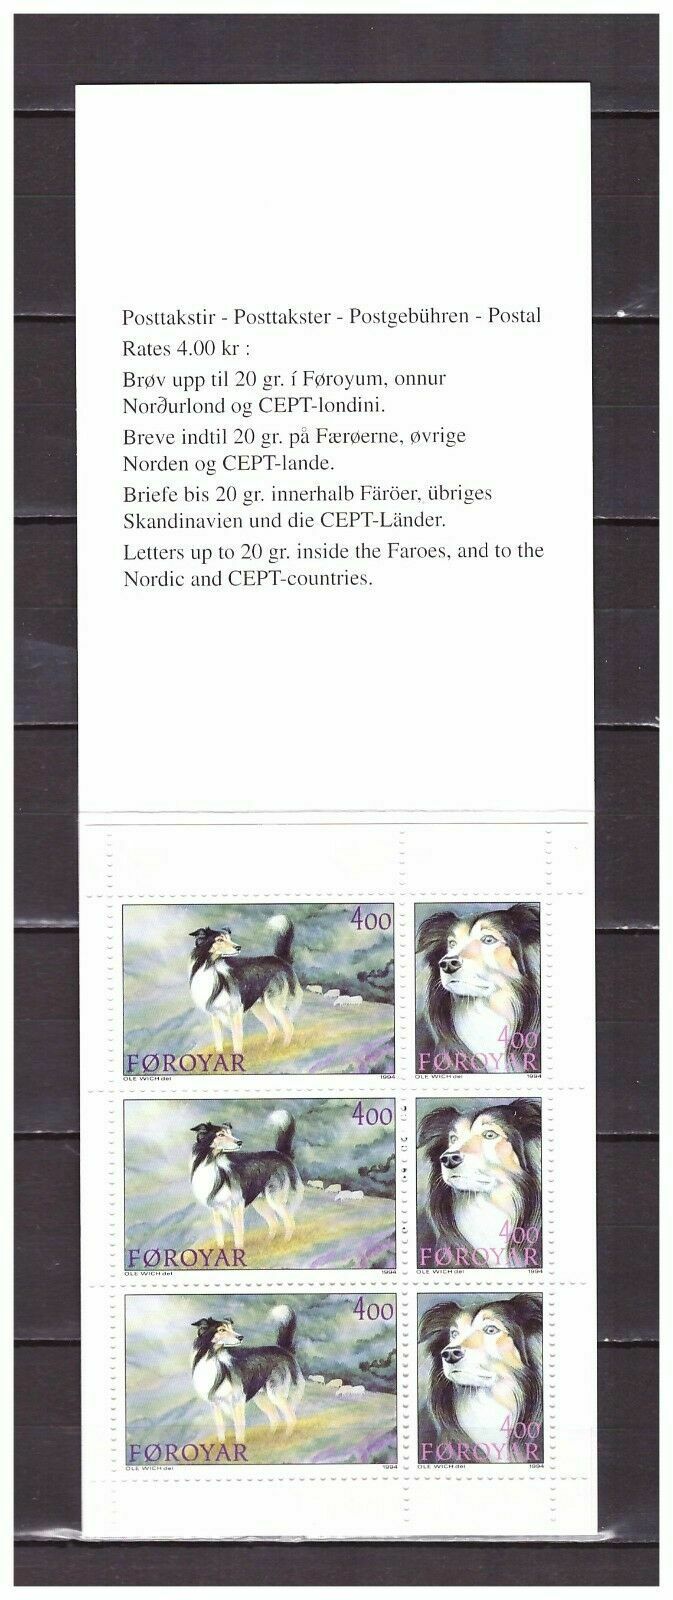 Insulele Feroe 1994 - Caini, carnet filatelic